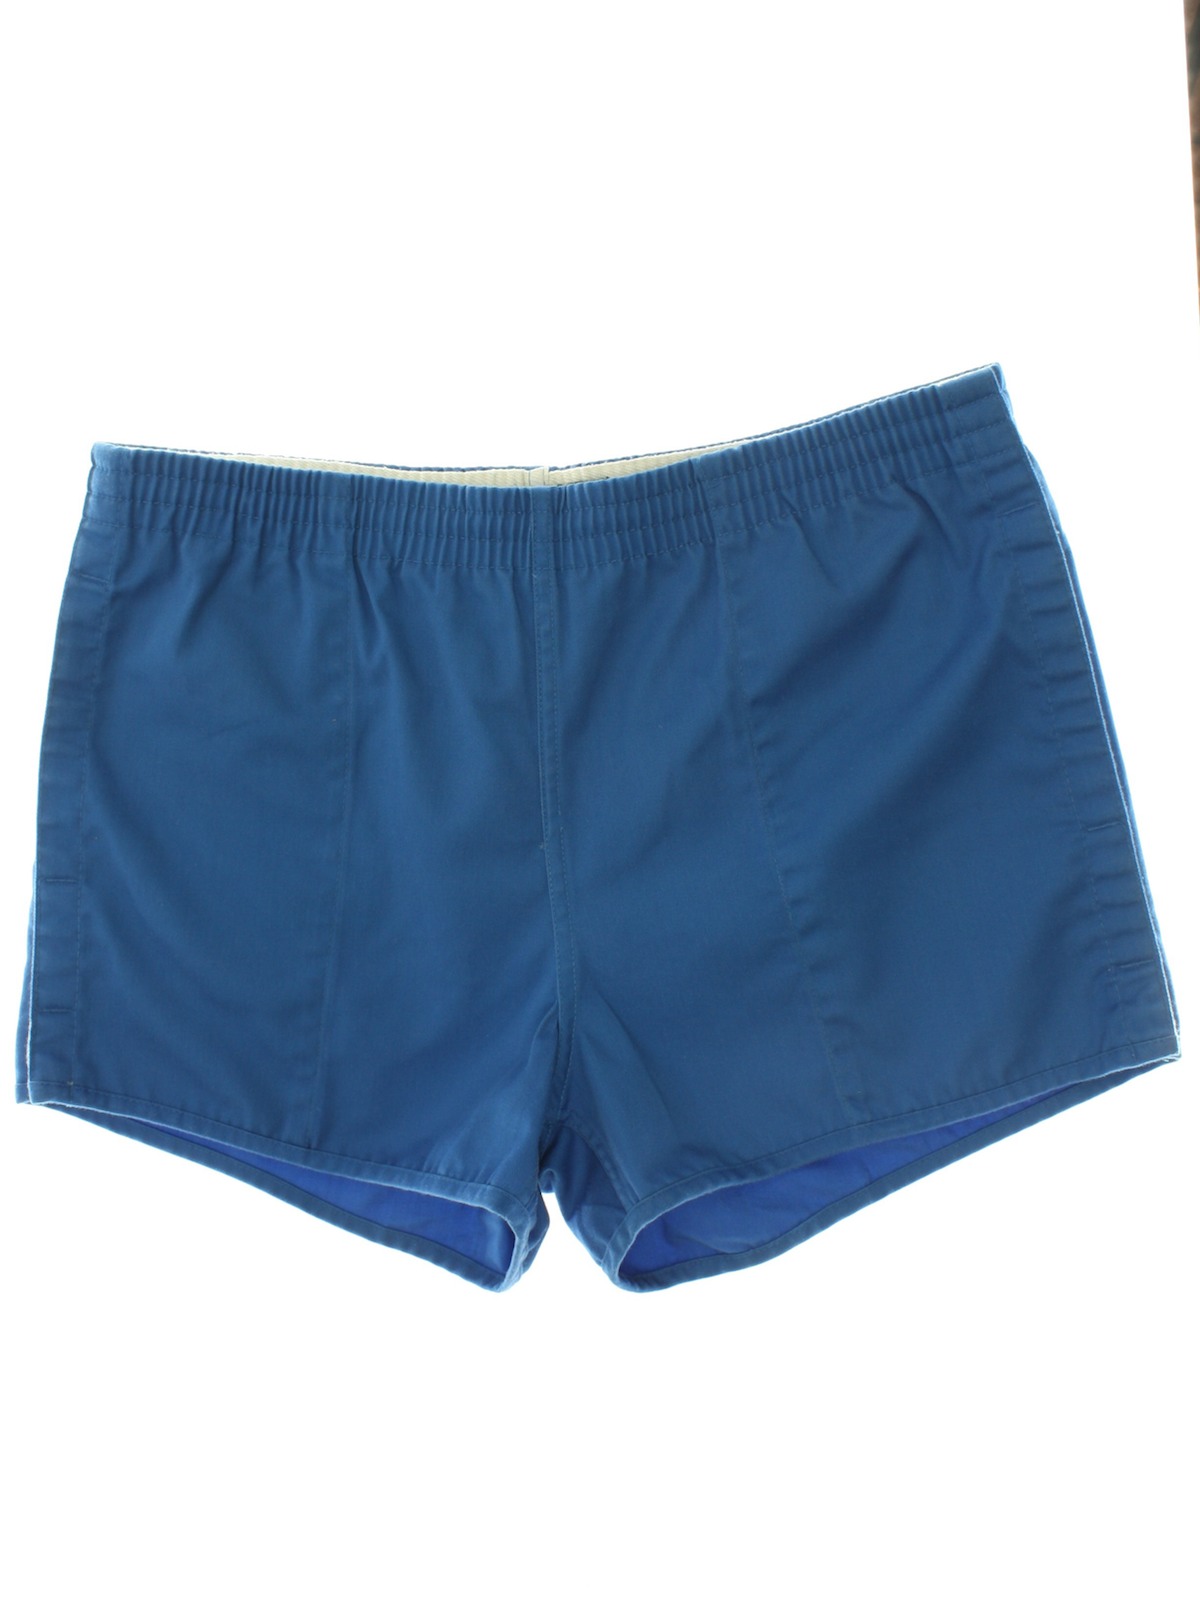 Vintage 1980's Shorts: 80s -Pro Celebrity- Mens blue background cotton ...